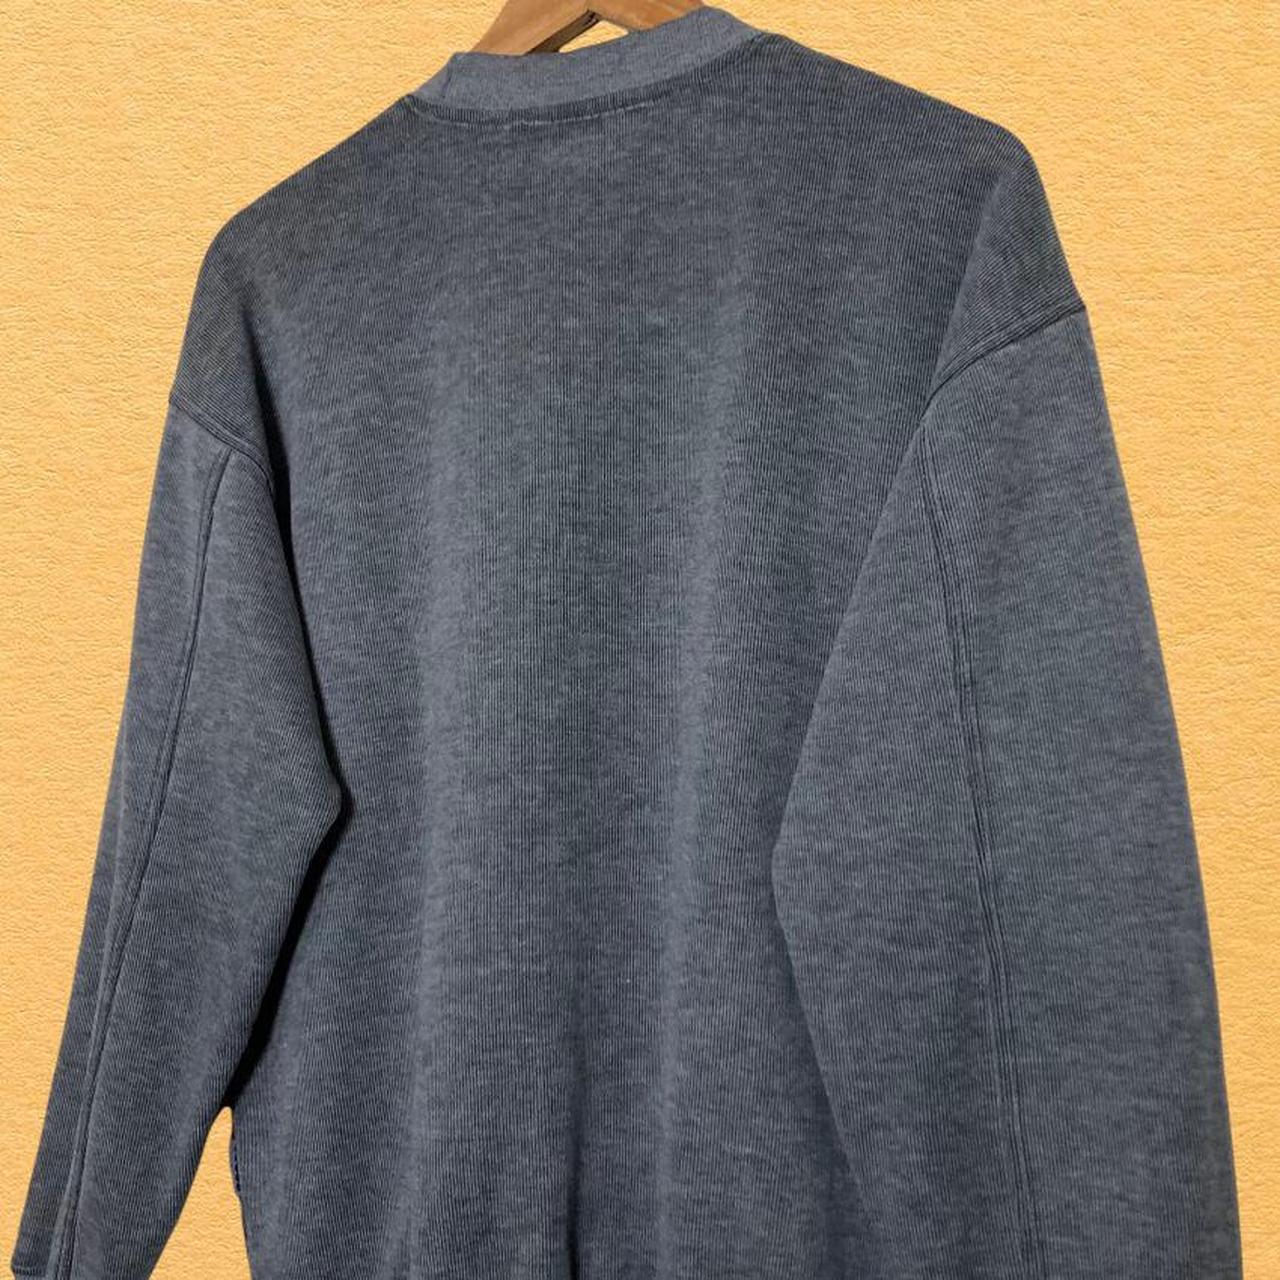 Vintage Nike Sweatshirt Amazing ribbed cotton... - Depop